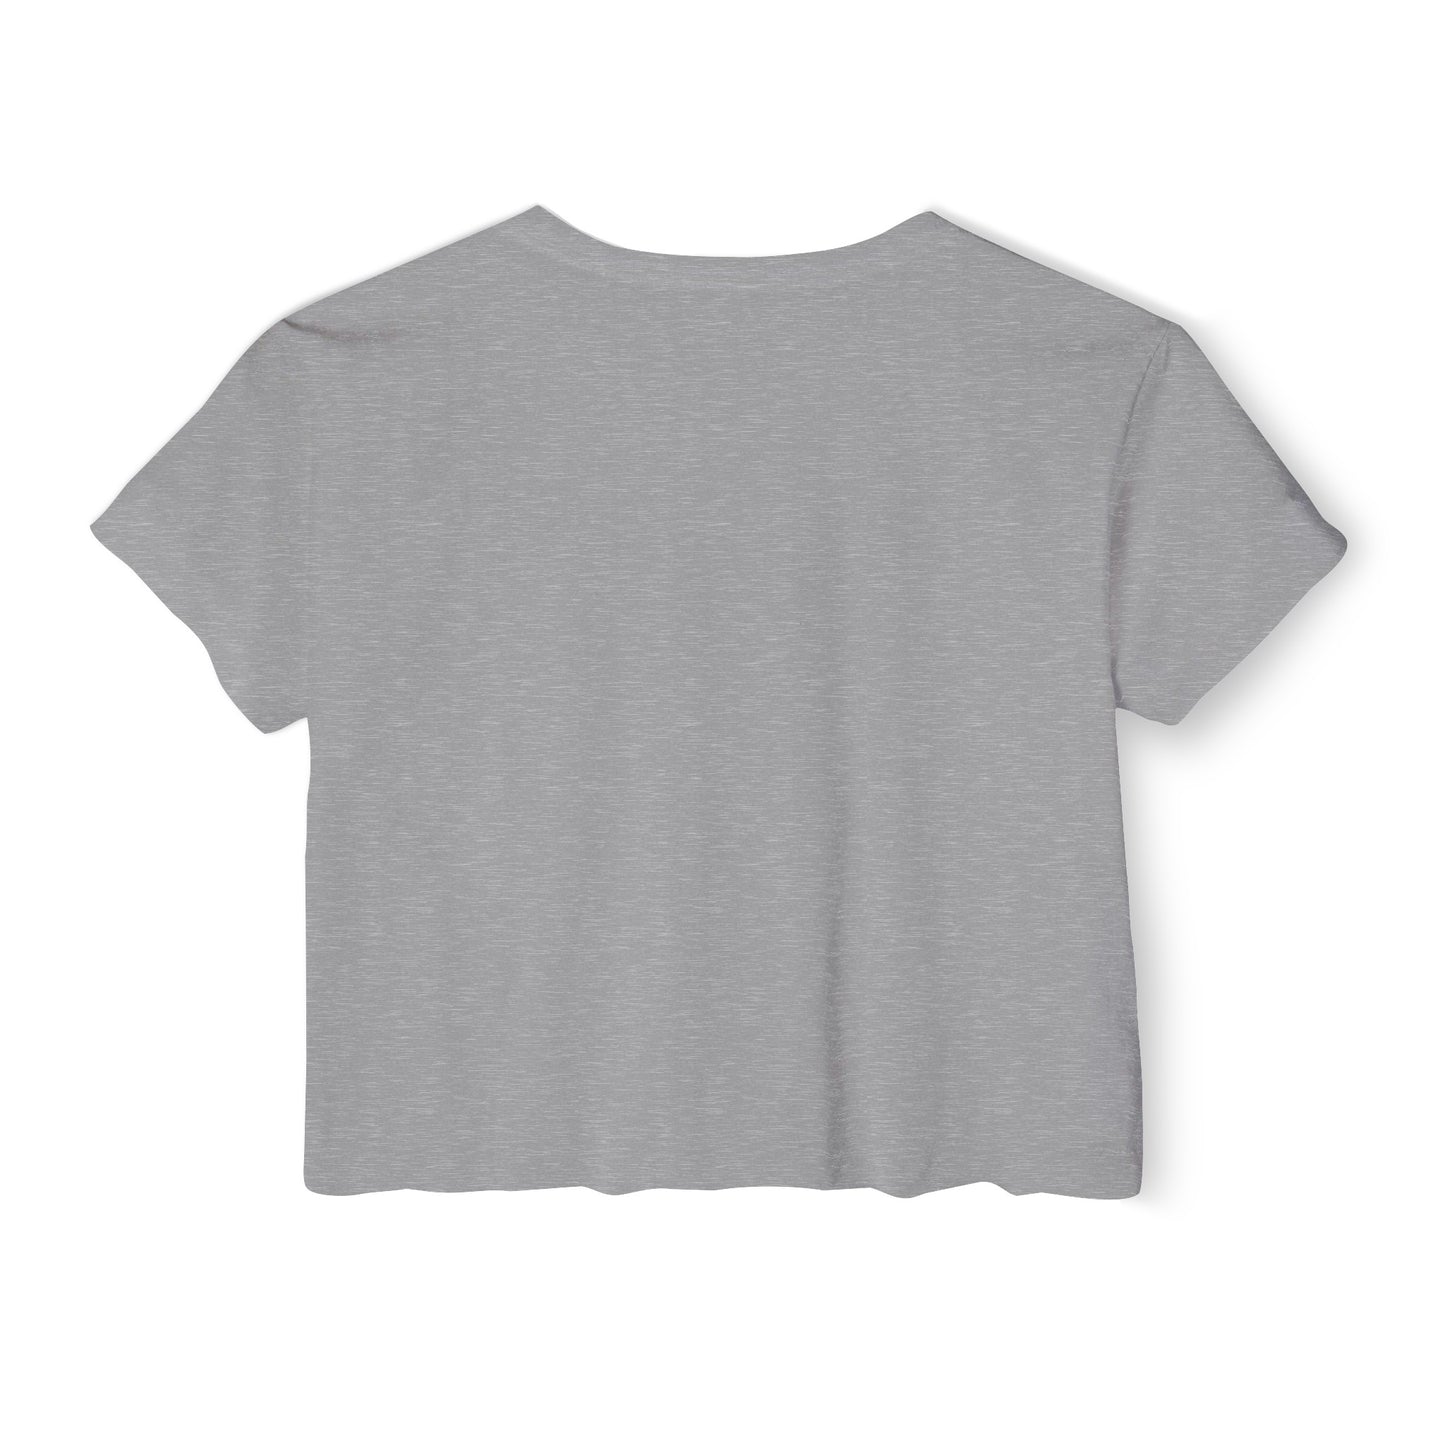 Women's Crop Top T-Shirt